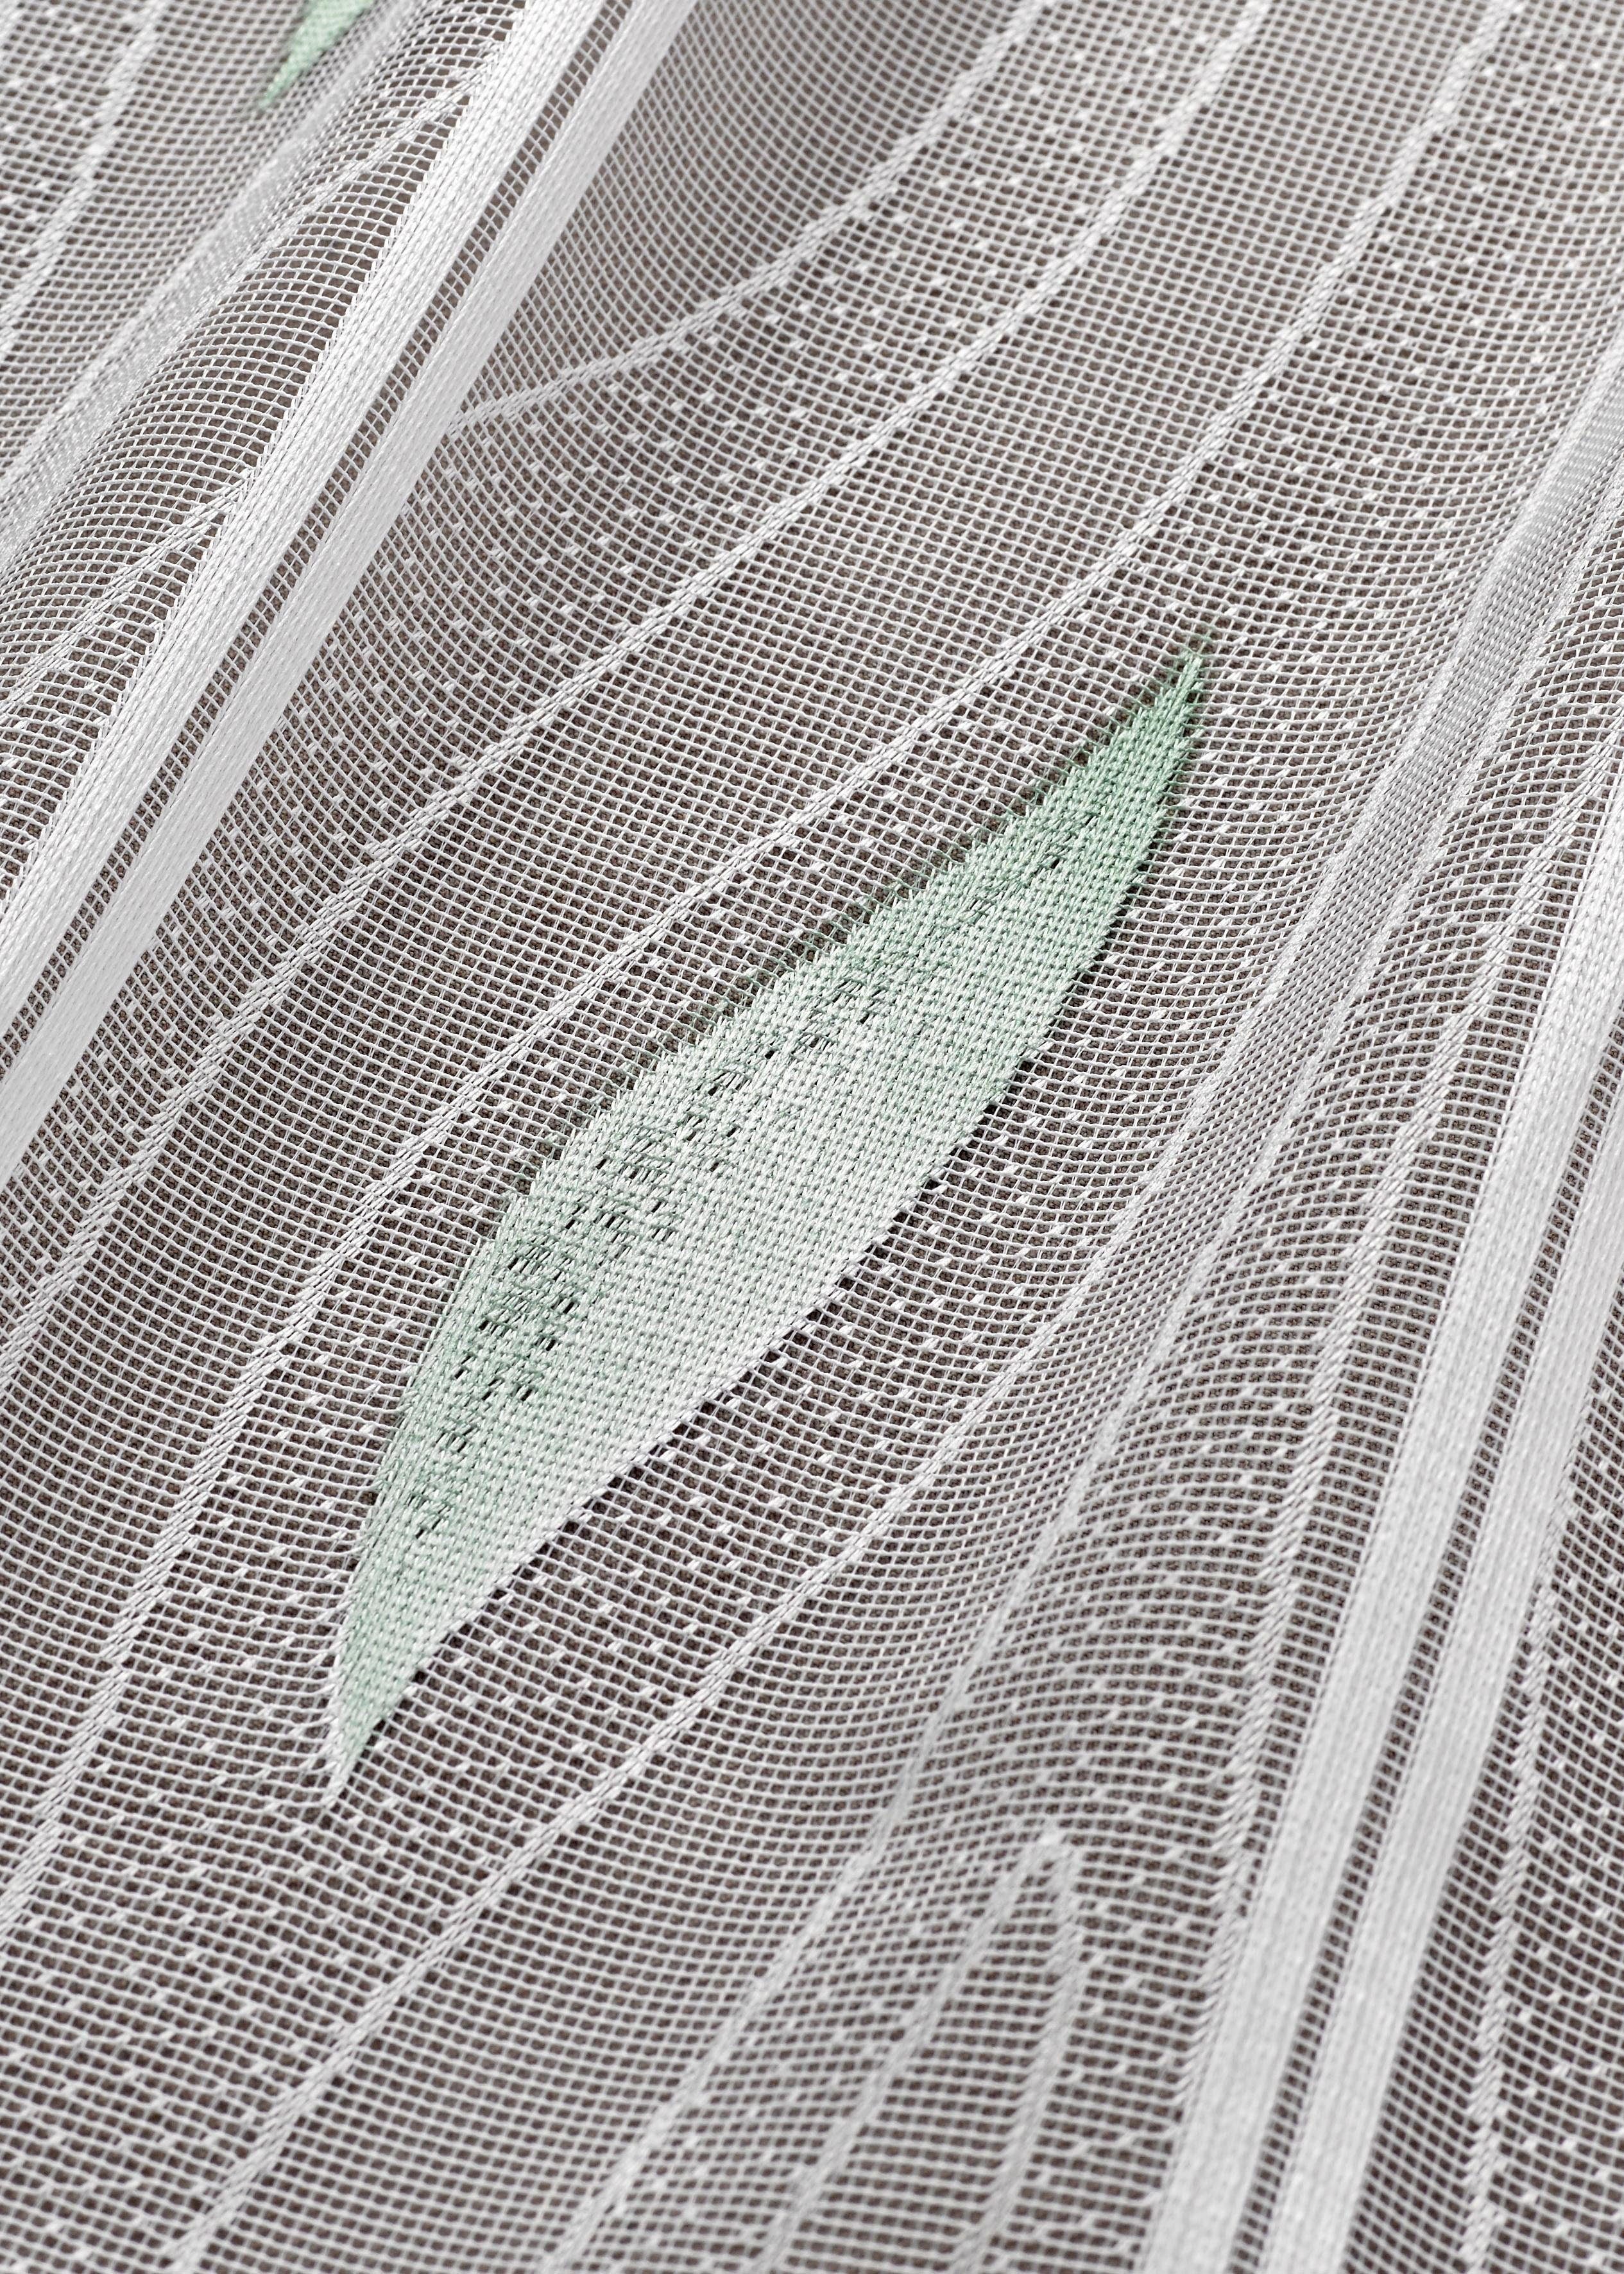 Scheibengardine Mathilda, VHG, Stangendurchzug St), transparent, Jacquard grün/weiß/apricot (1